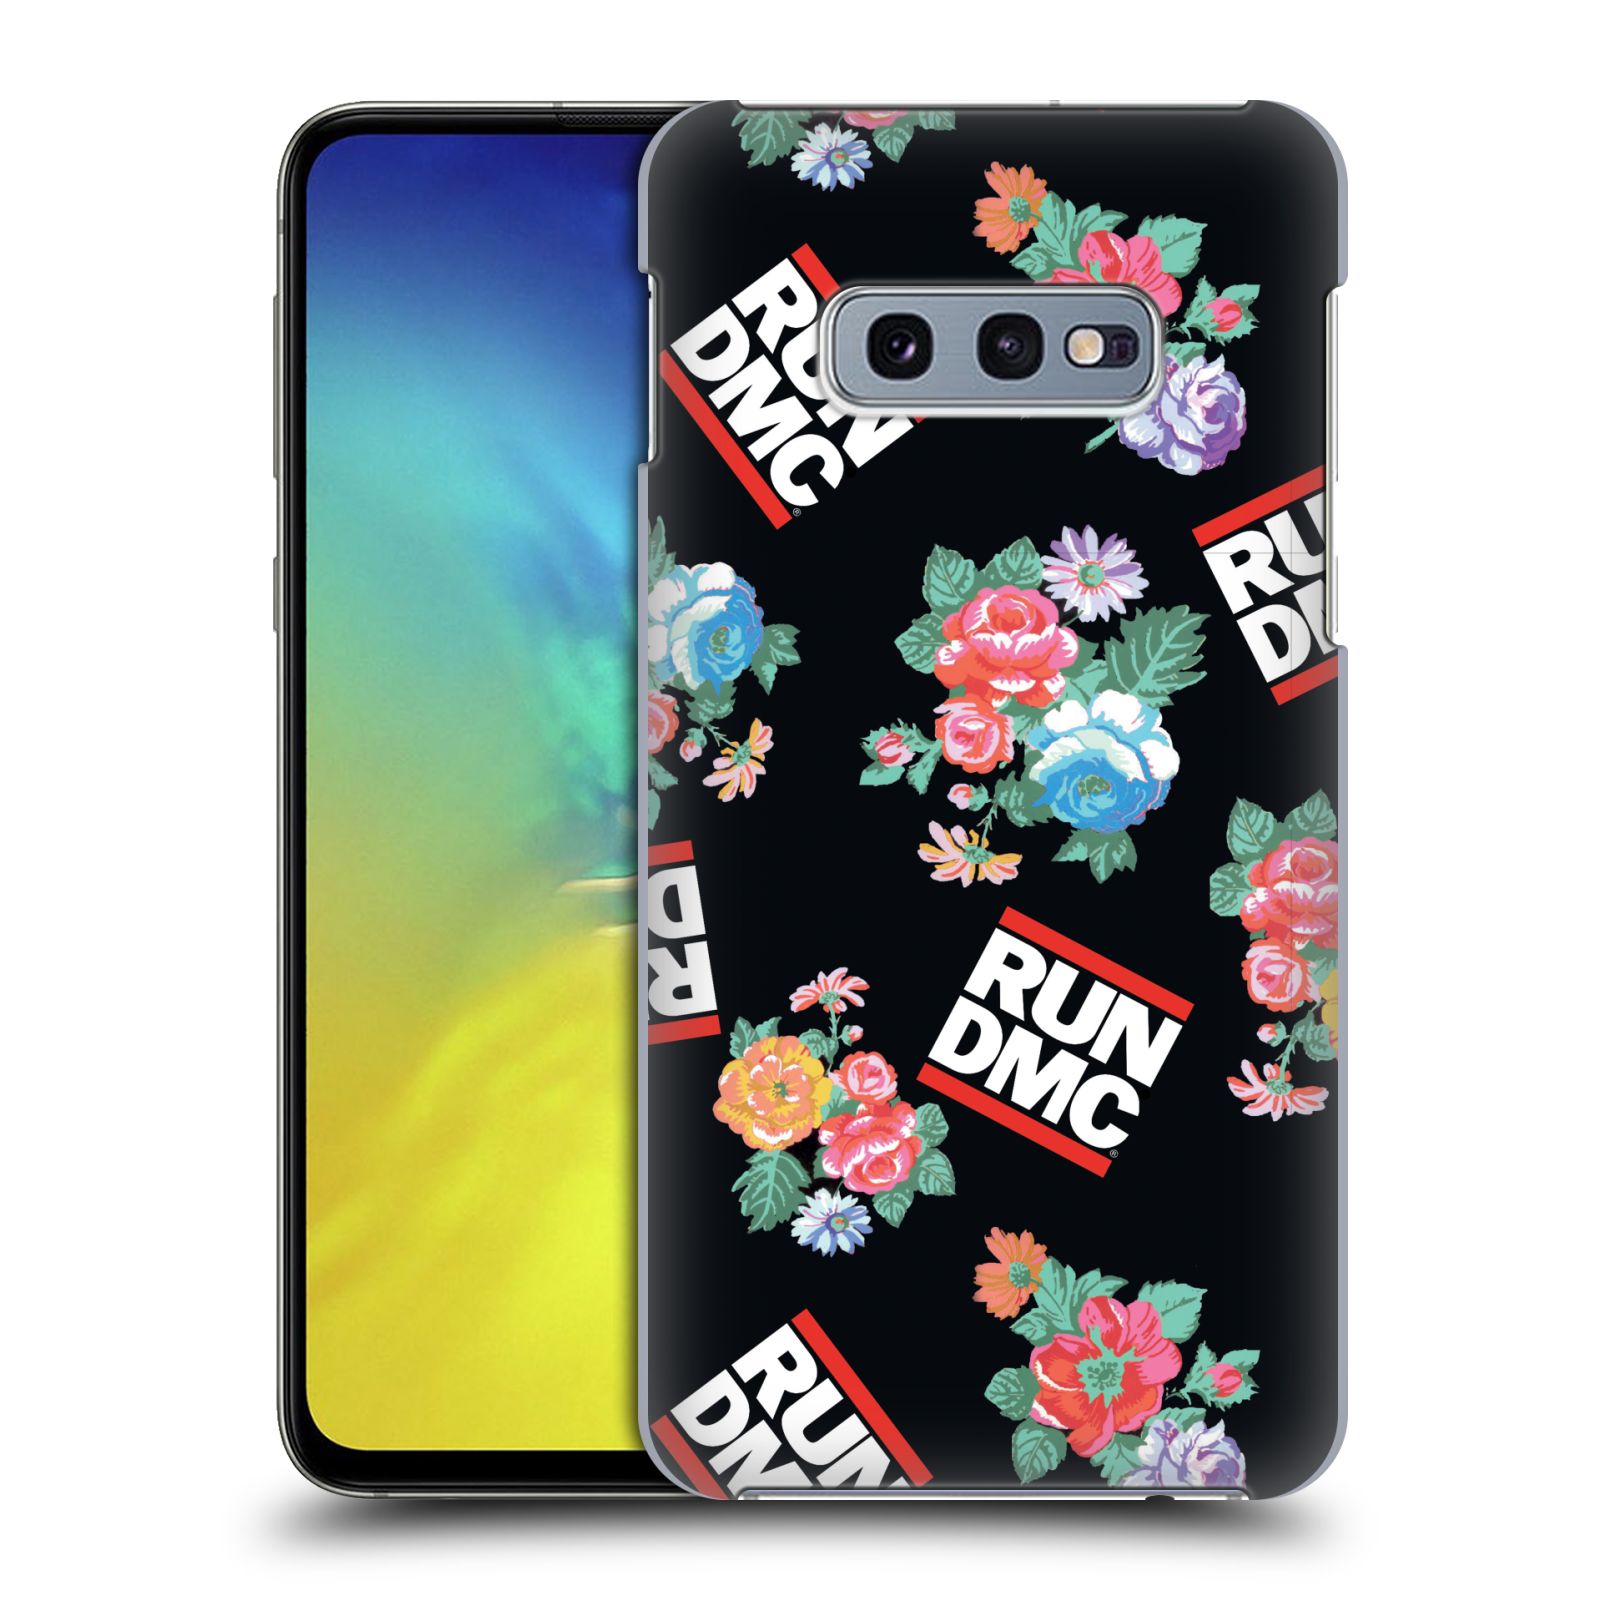 Pouzdro na mobil Samsung Galaxy S10e - HEAD CASE - rapová kapela Run DMC květiny černé pozadí